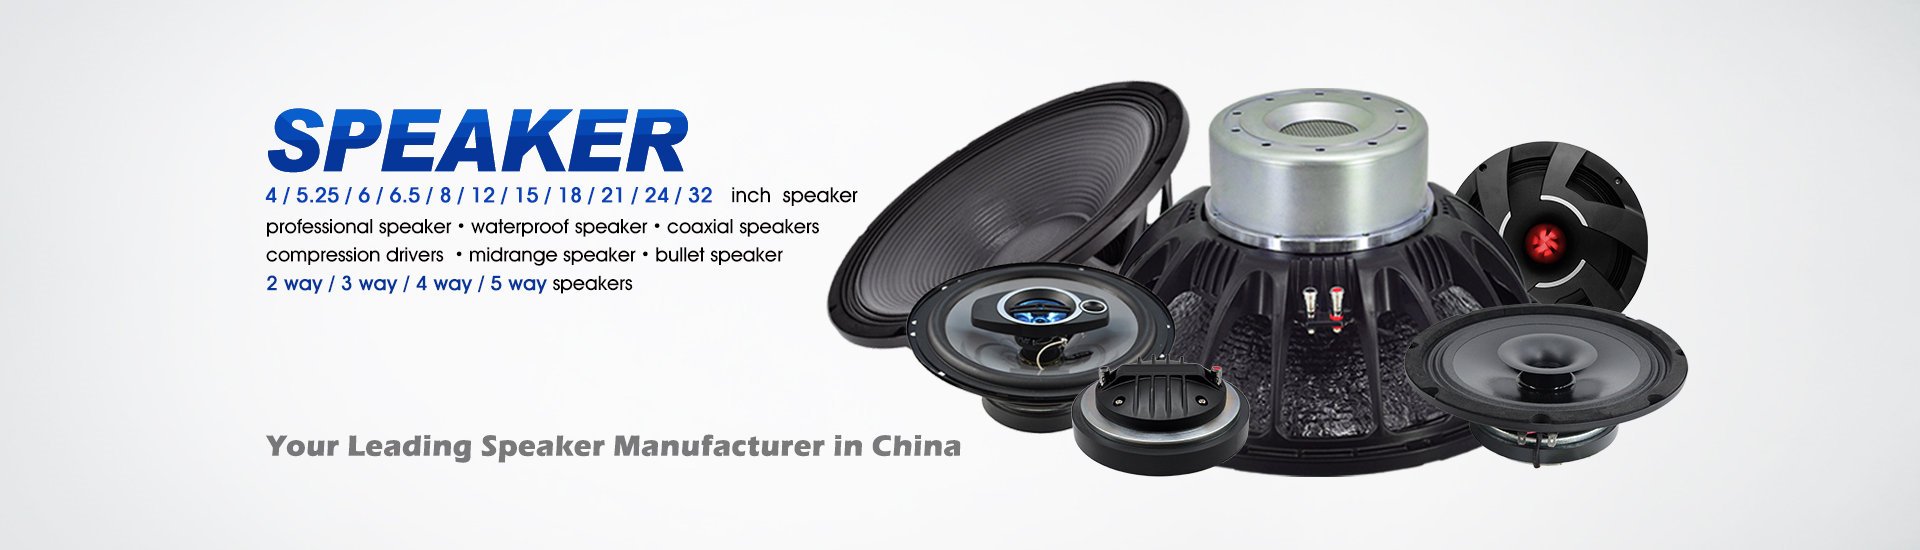 Speaker Manufacturer in China